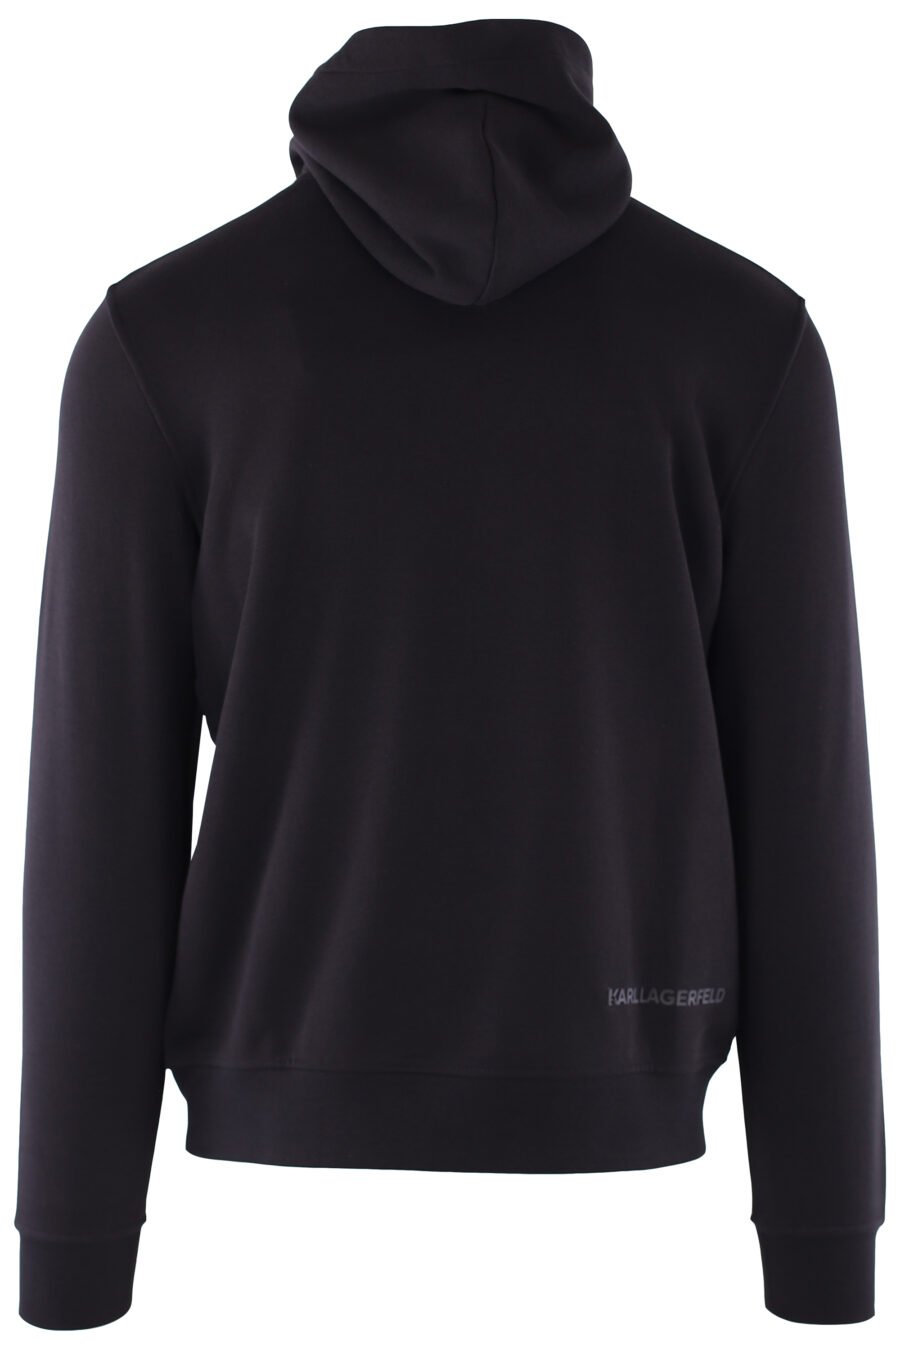 Black hooded sweatshirt with blue metallic "rue st guillaume paris" logo - IMG 6408